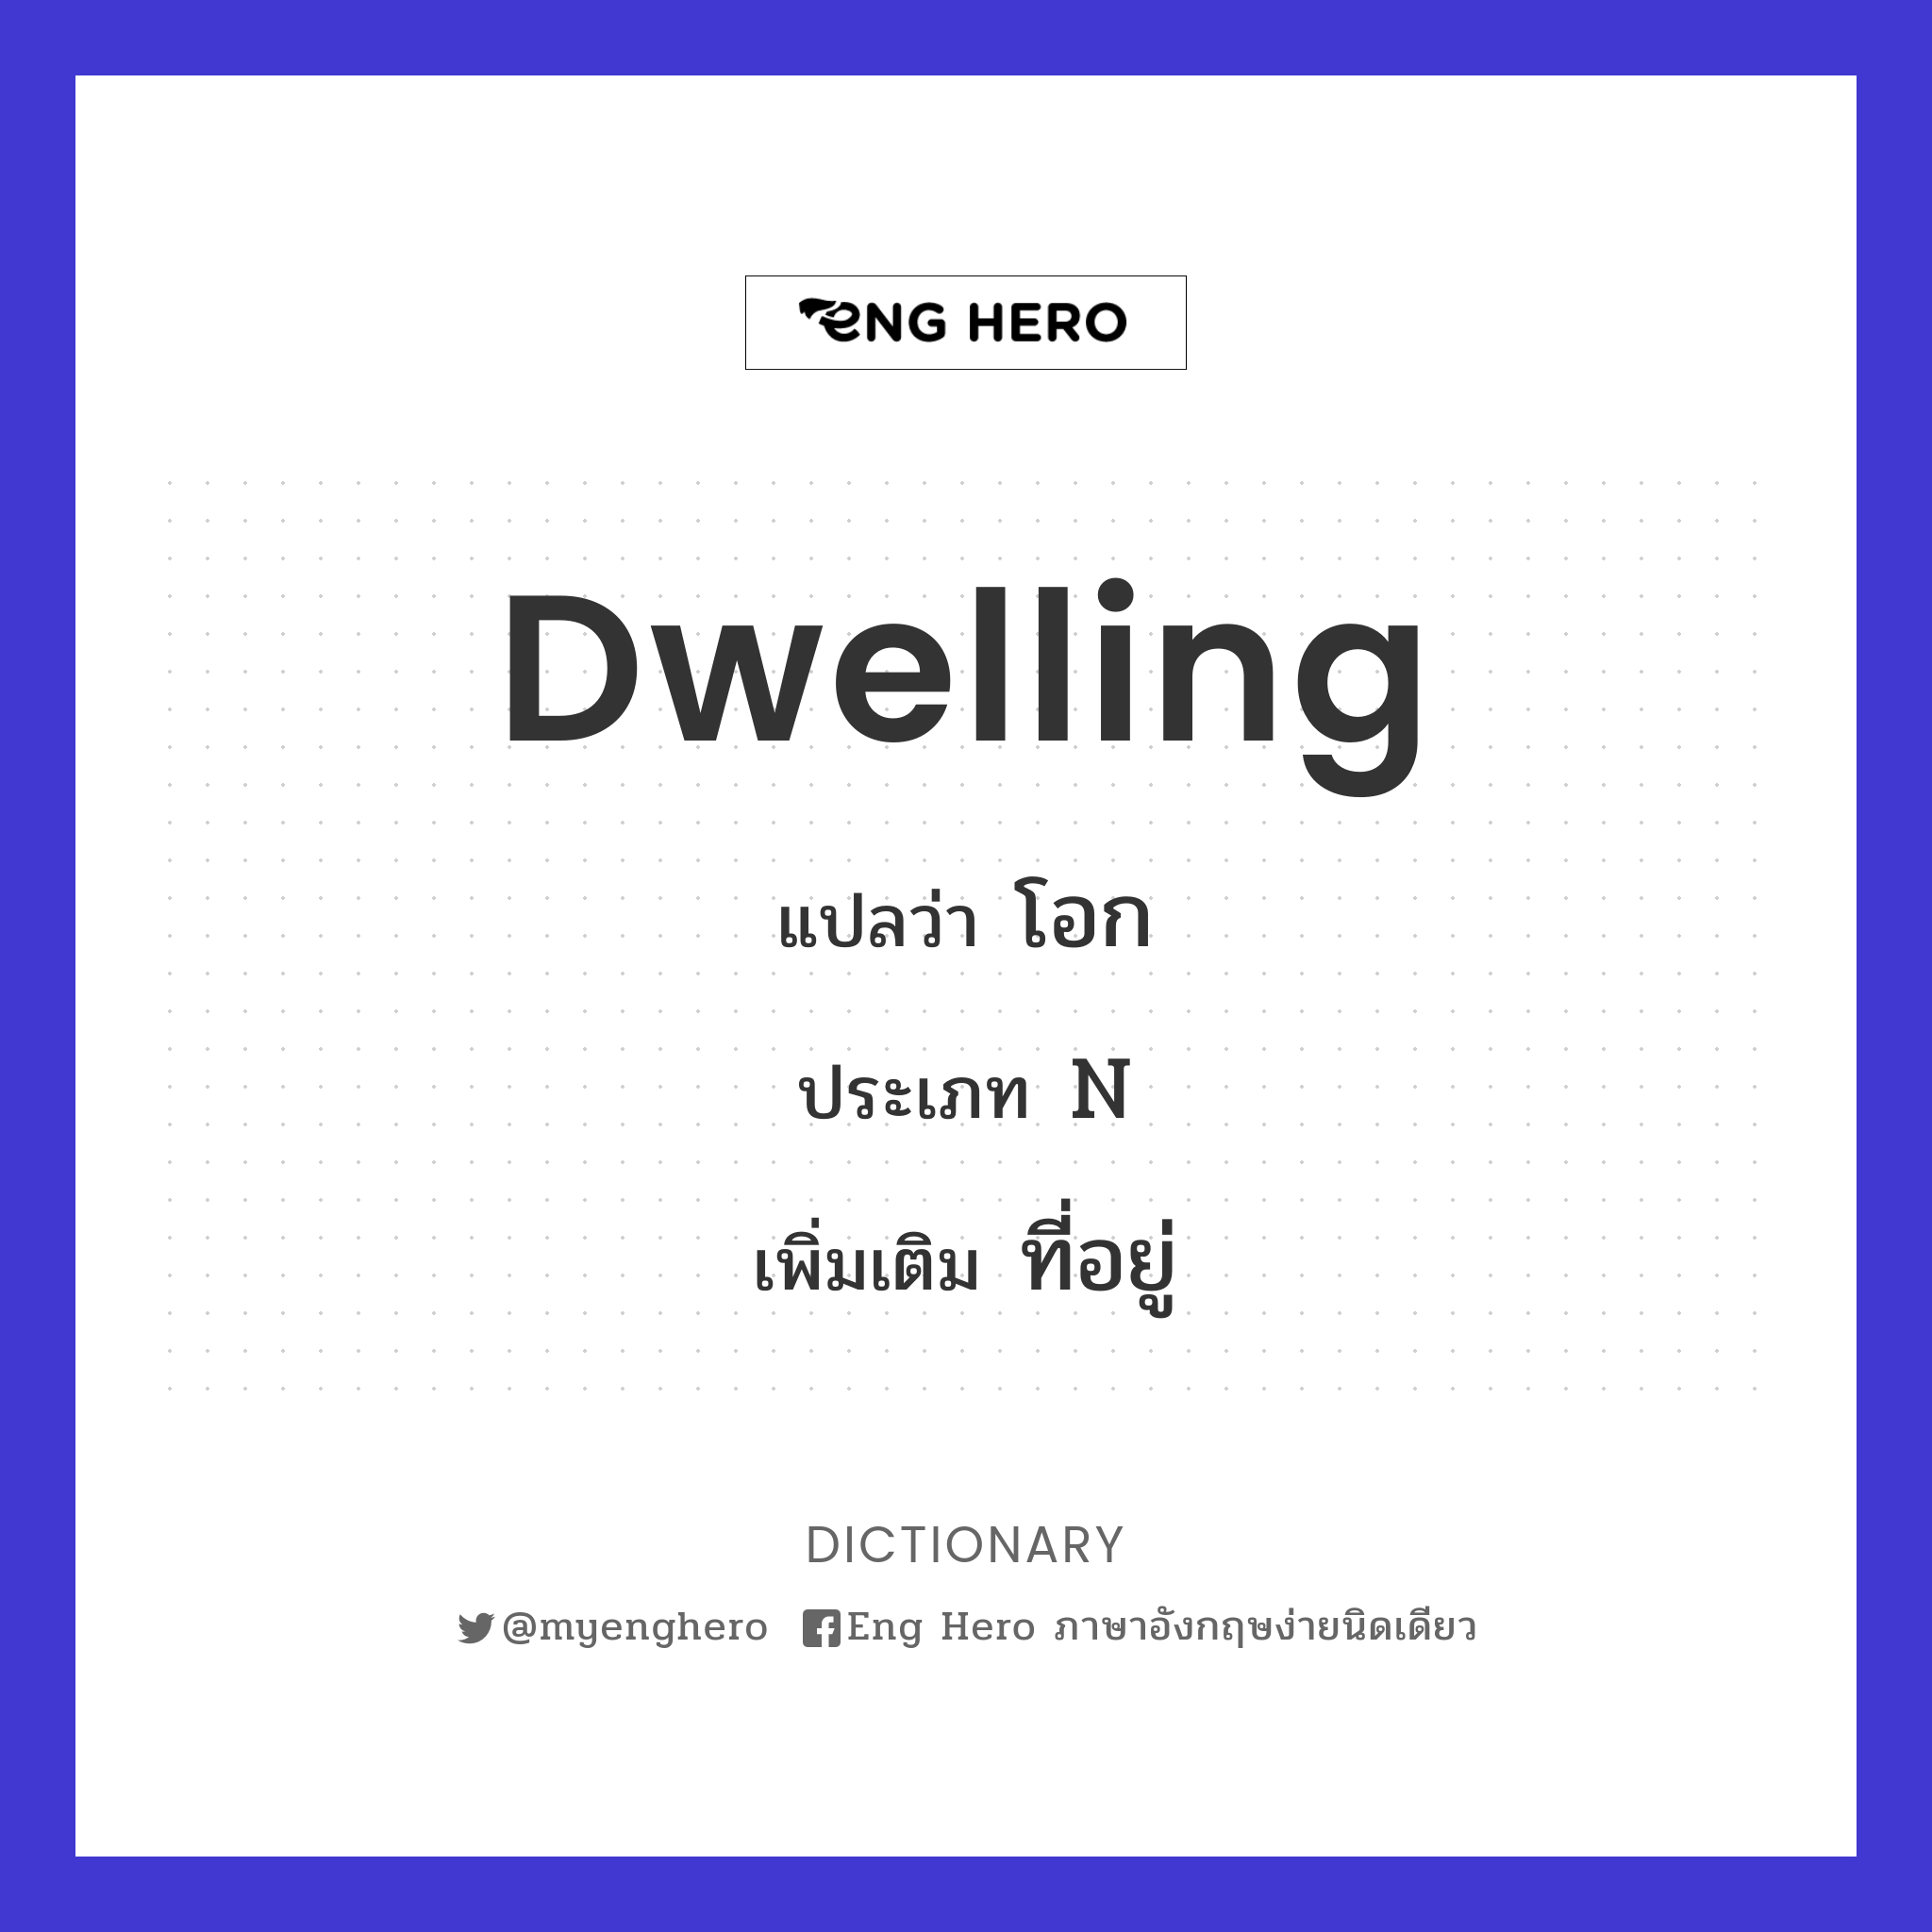 dwelling